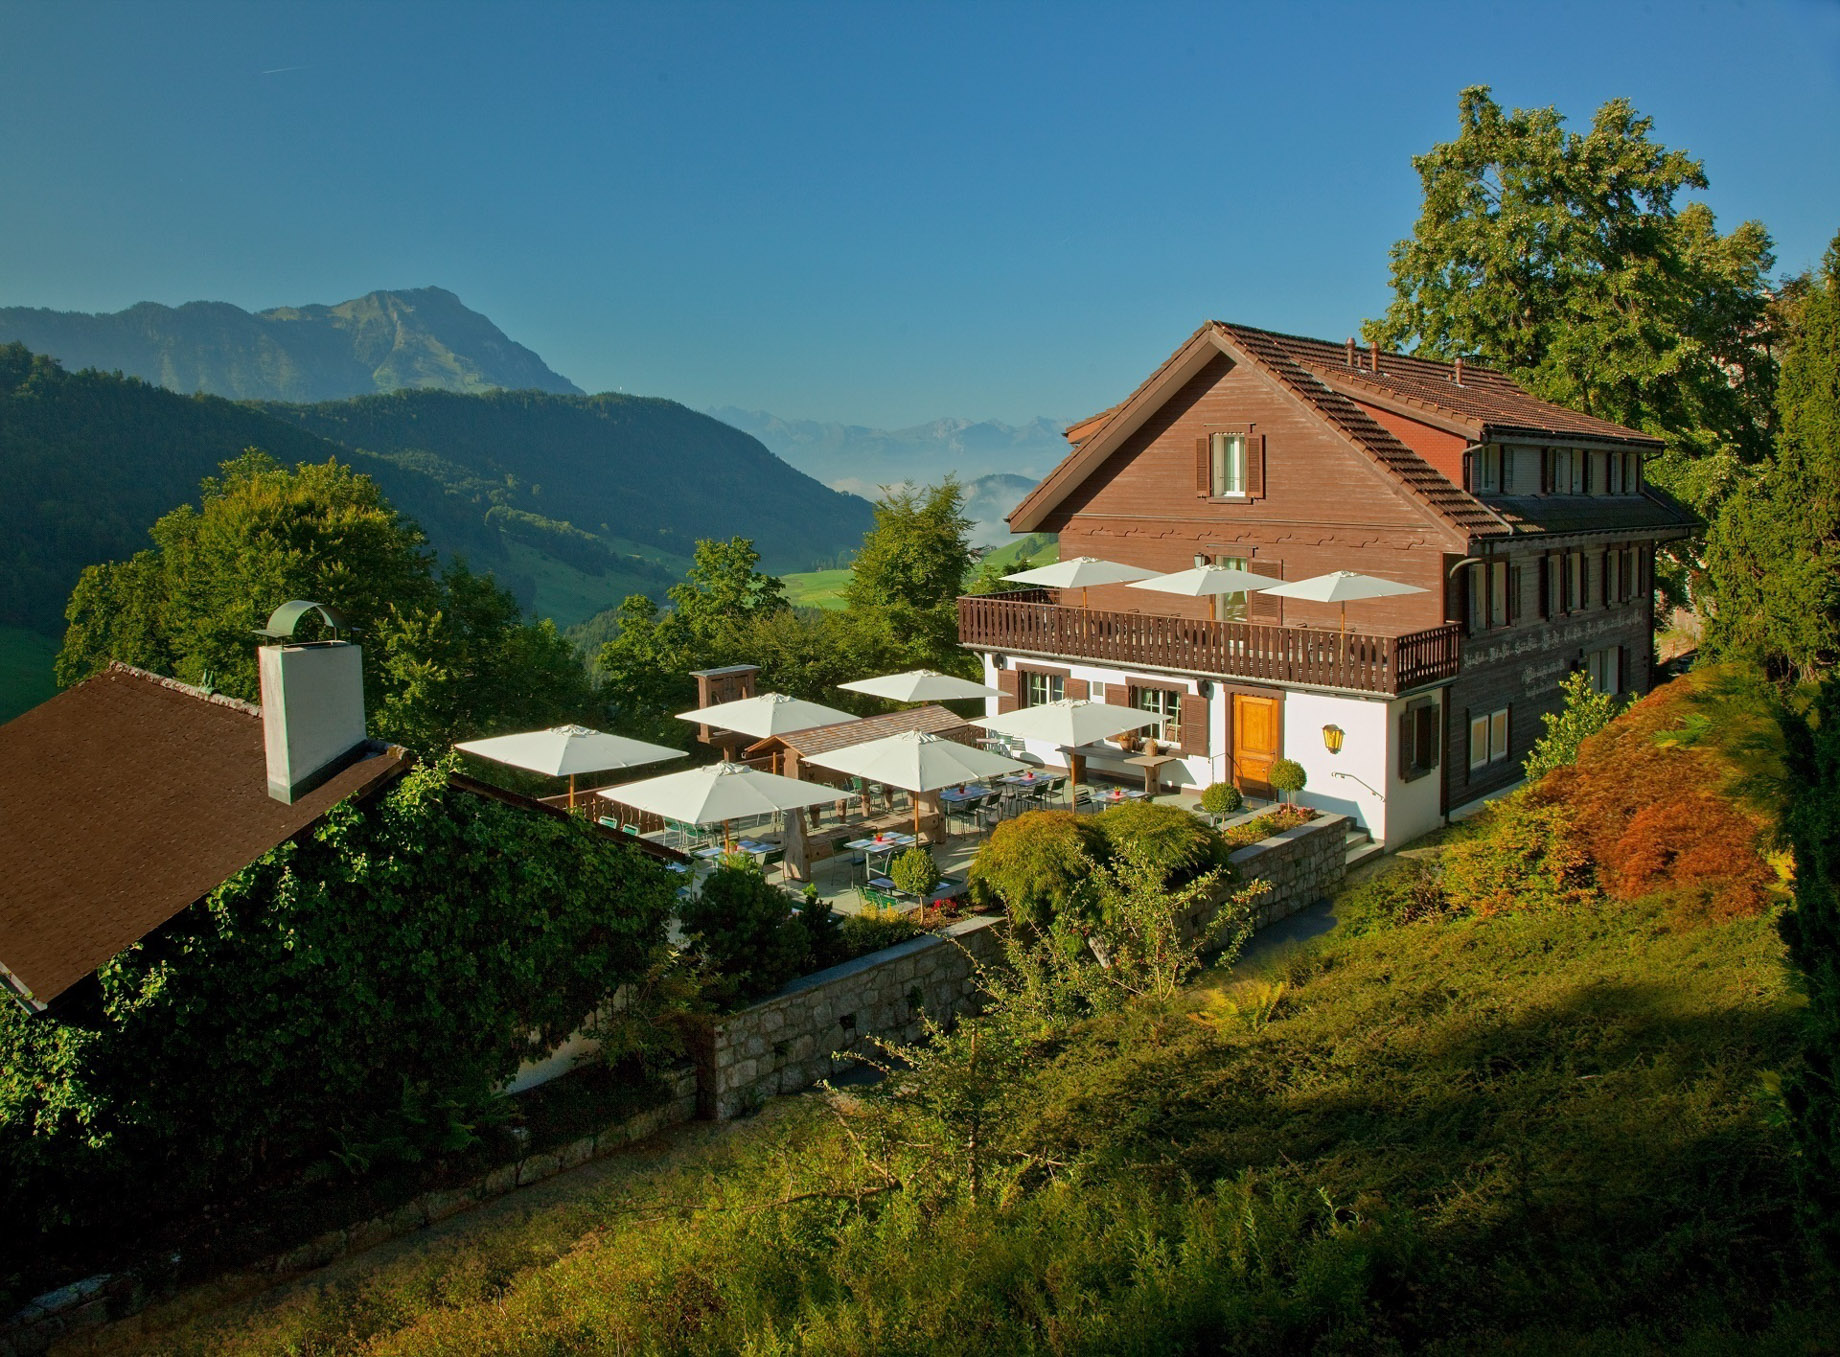 Taverne 1879 - Burgenstock Hotels & Resort - Obburgen, Switzerland